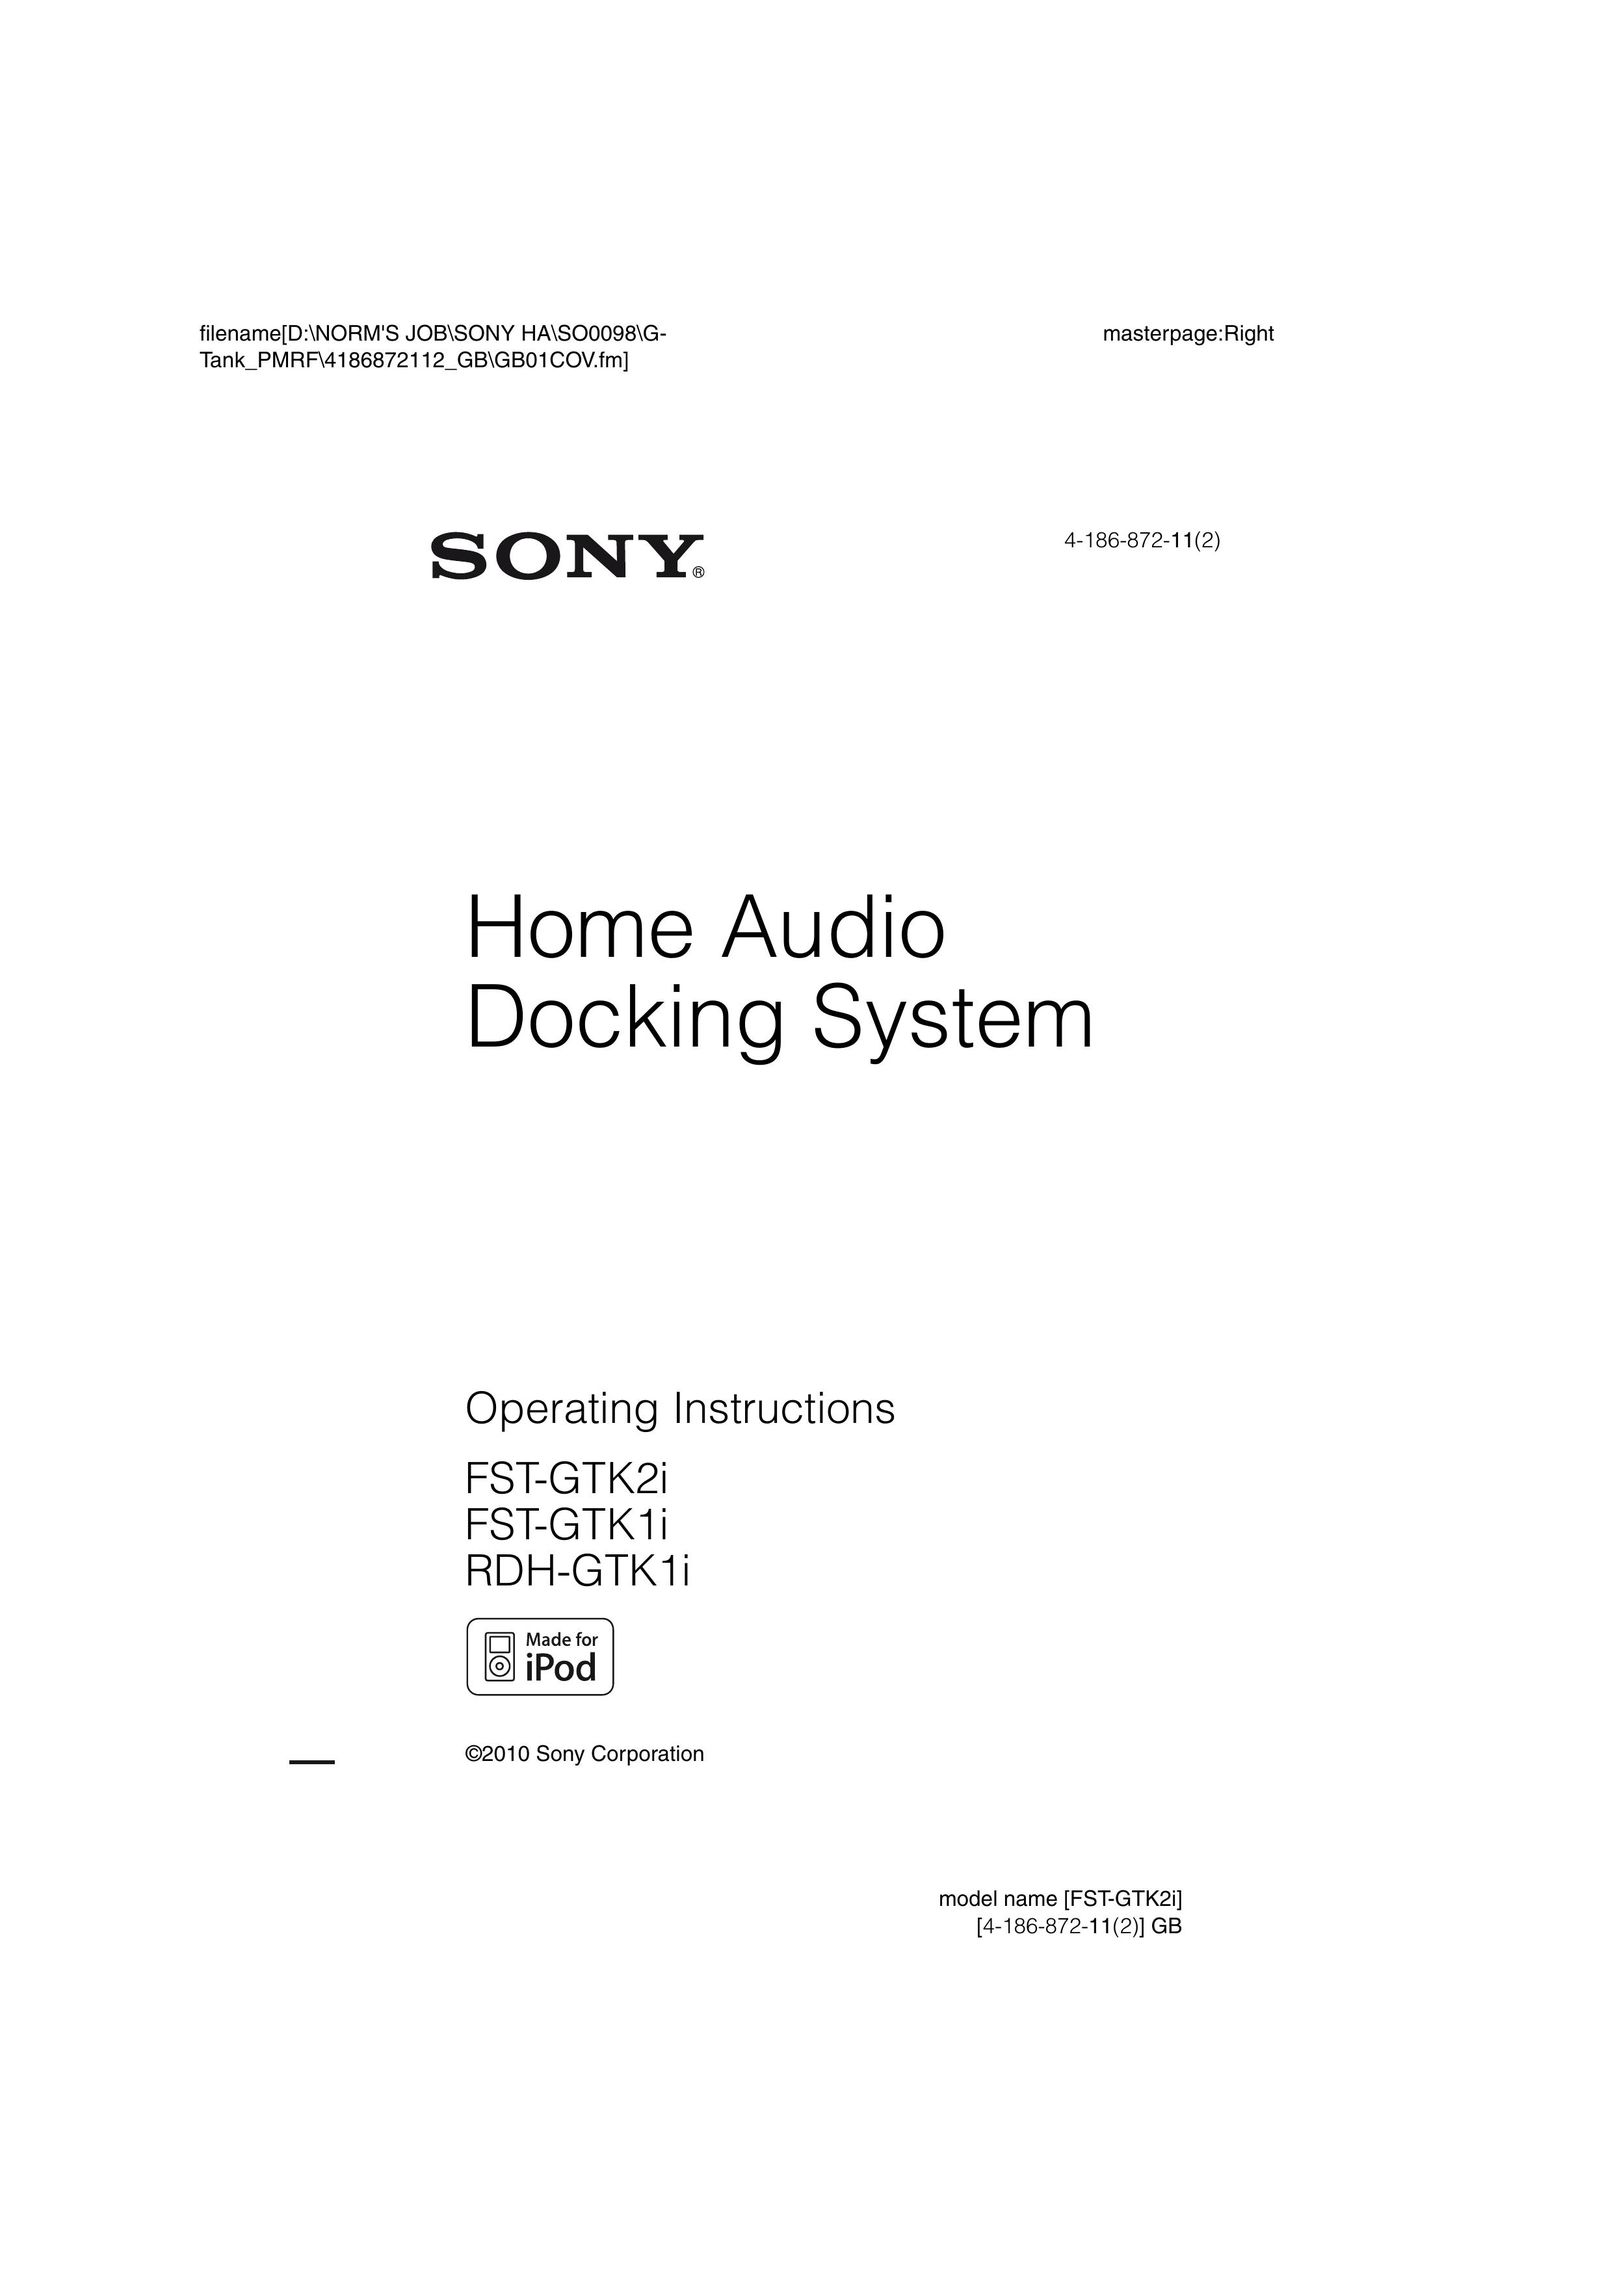 Sony FST-GTK1I MP3 Docking Station User Manual